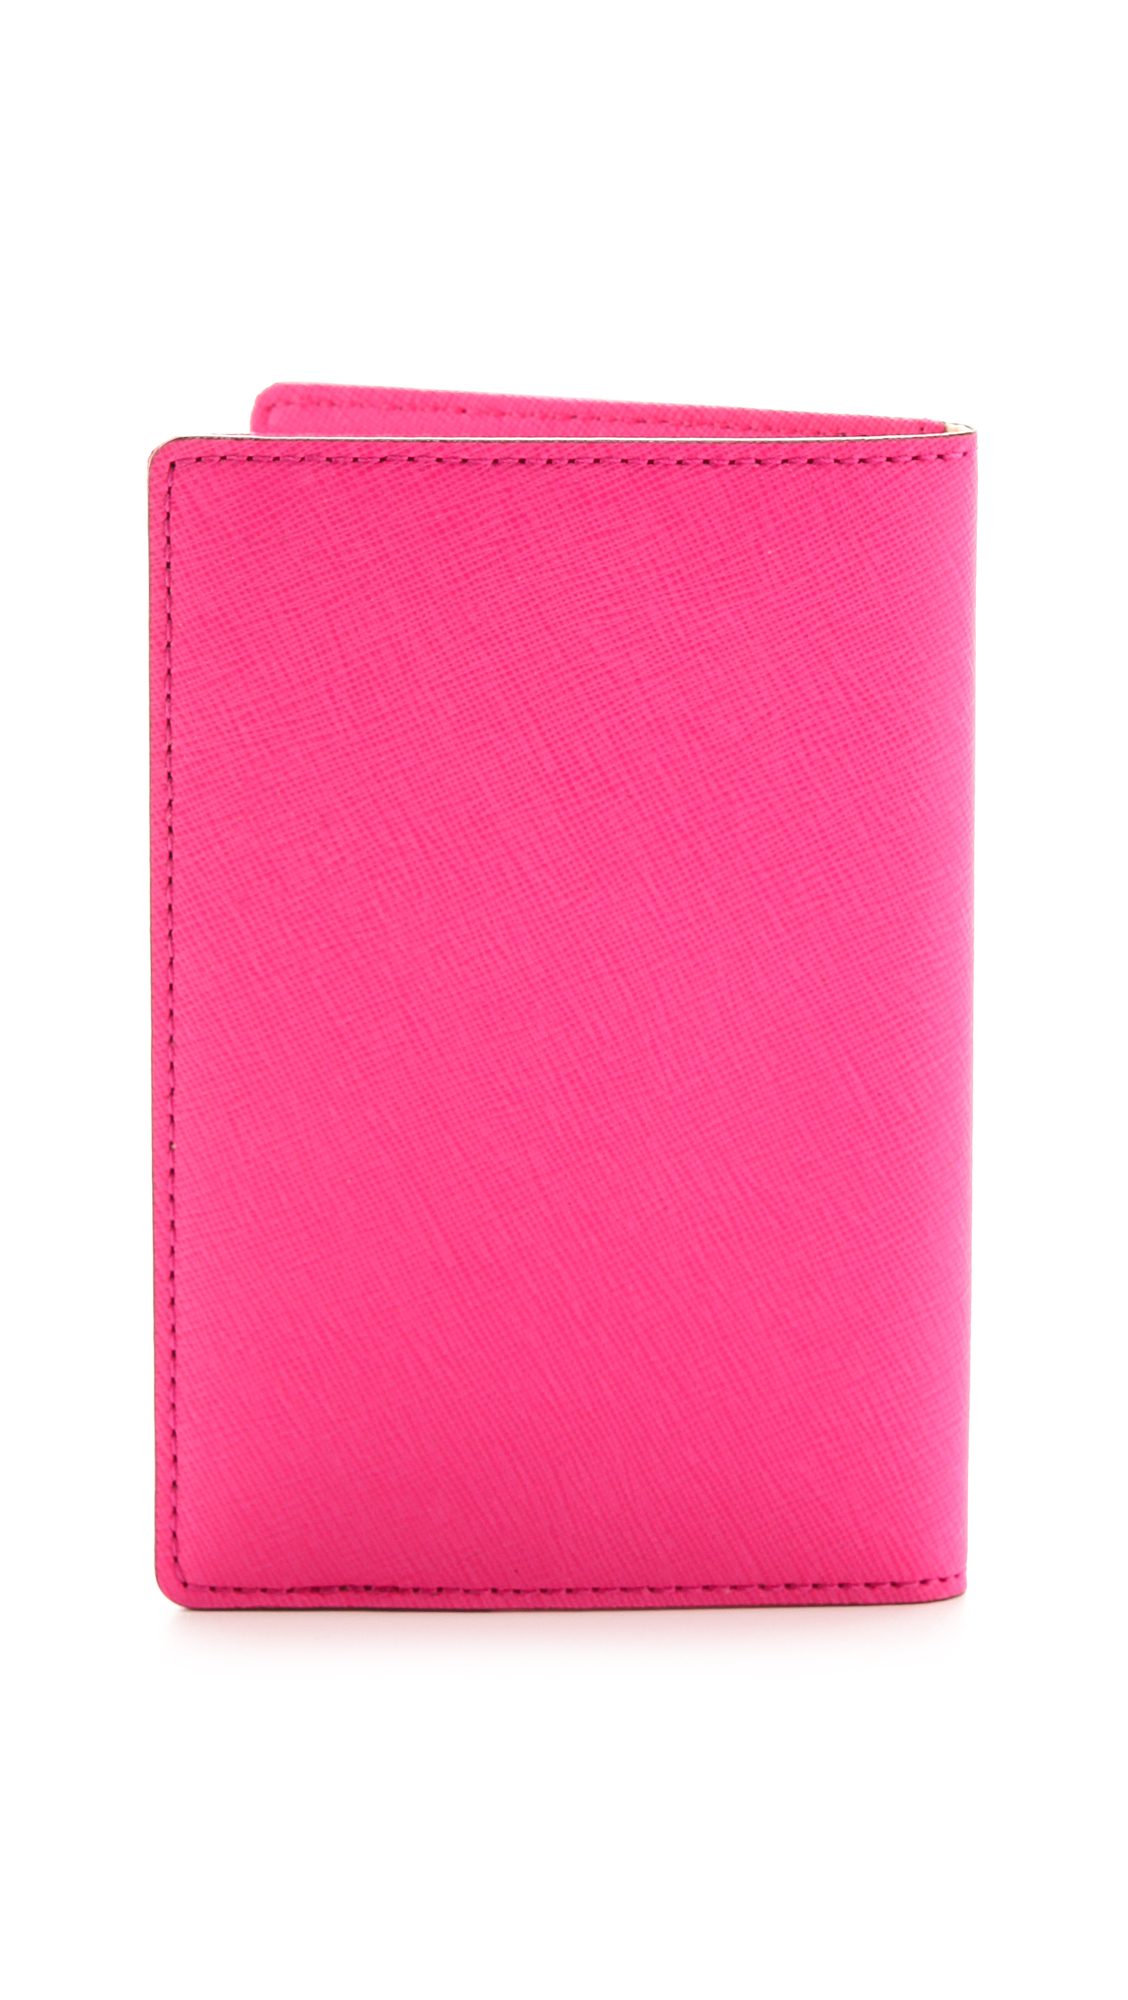 Lyst - Kate Spade Travel Passport Holder Vivid Snapdragon in Pink